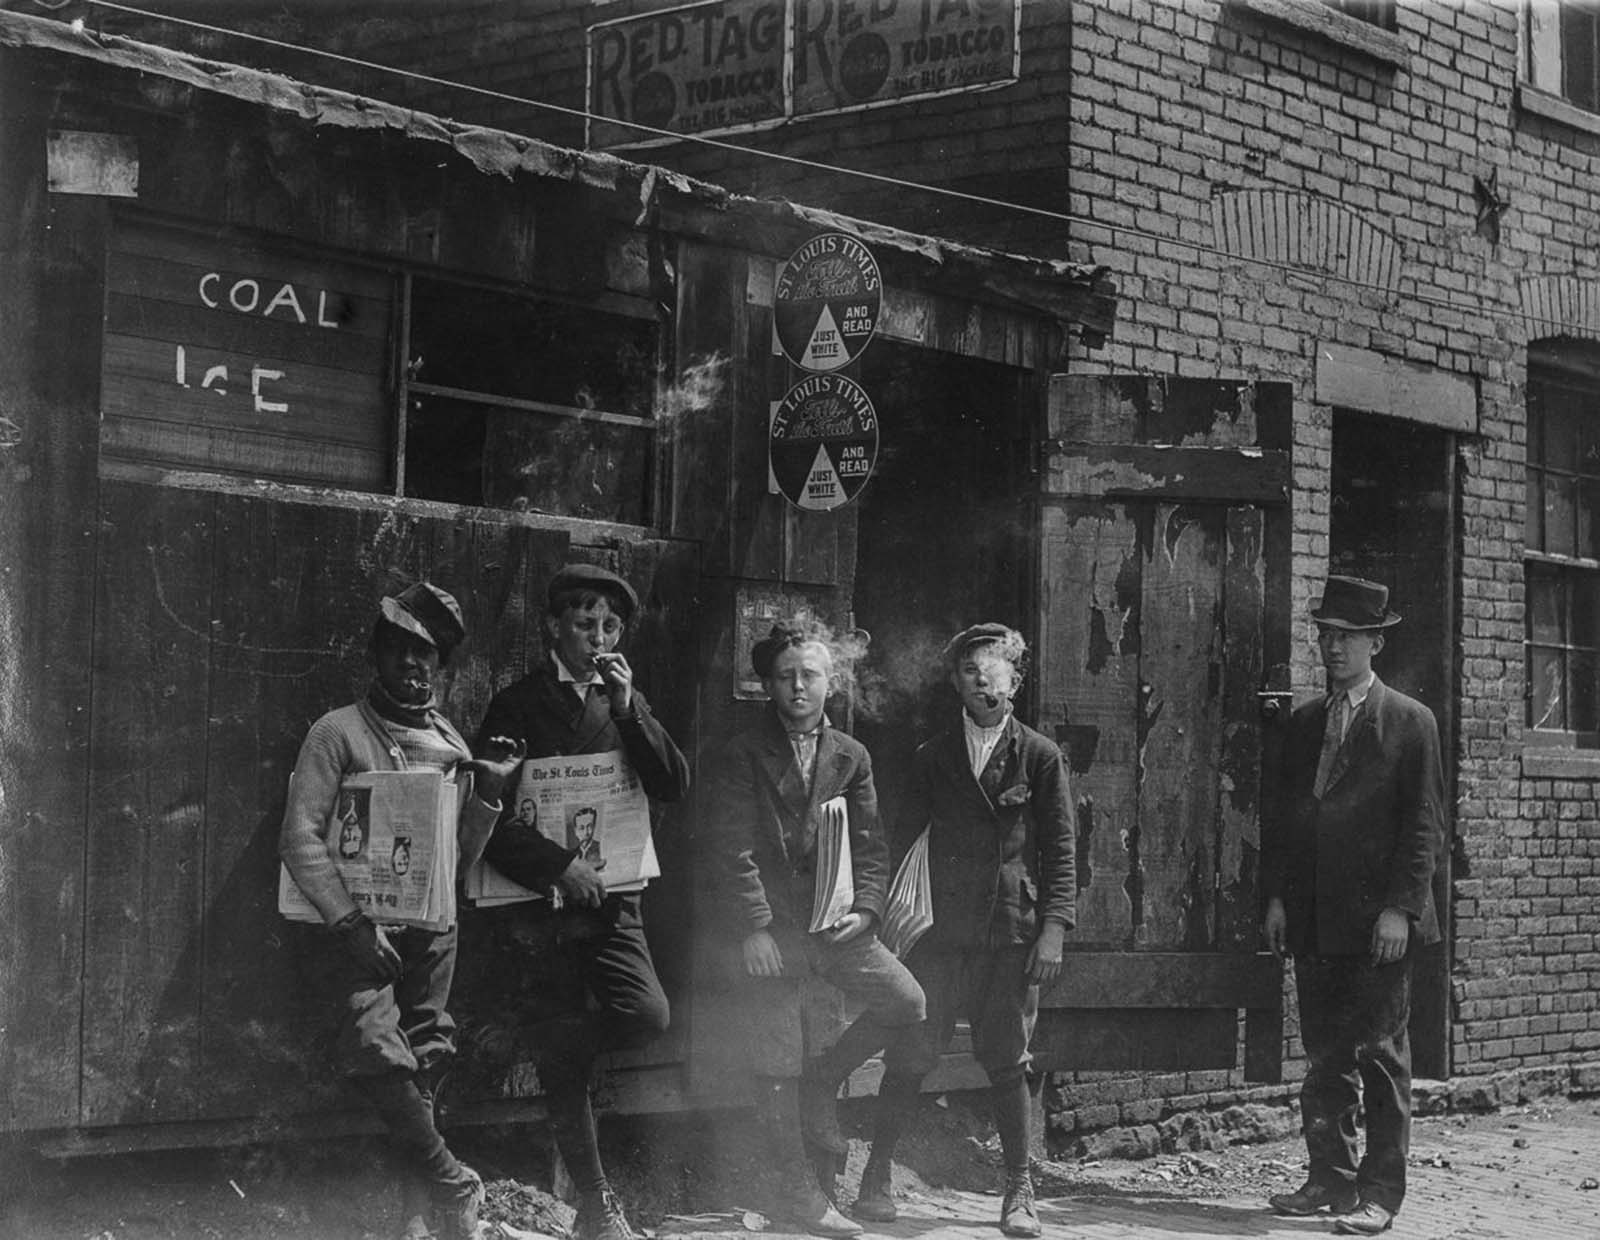 11 a.m. Newsies at Skeeter’s Branch, Jefferson near Franklin. They were all smoking. St. Louis, Missouri, 1910.